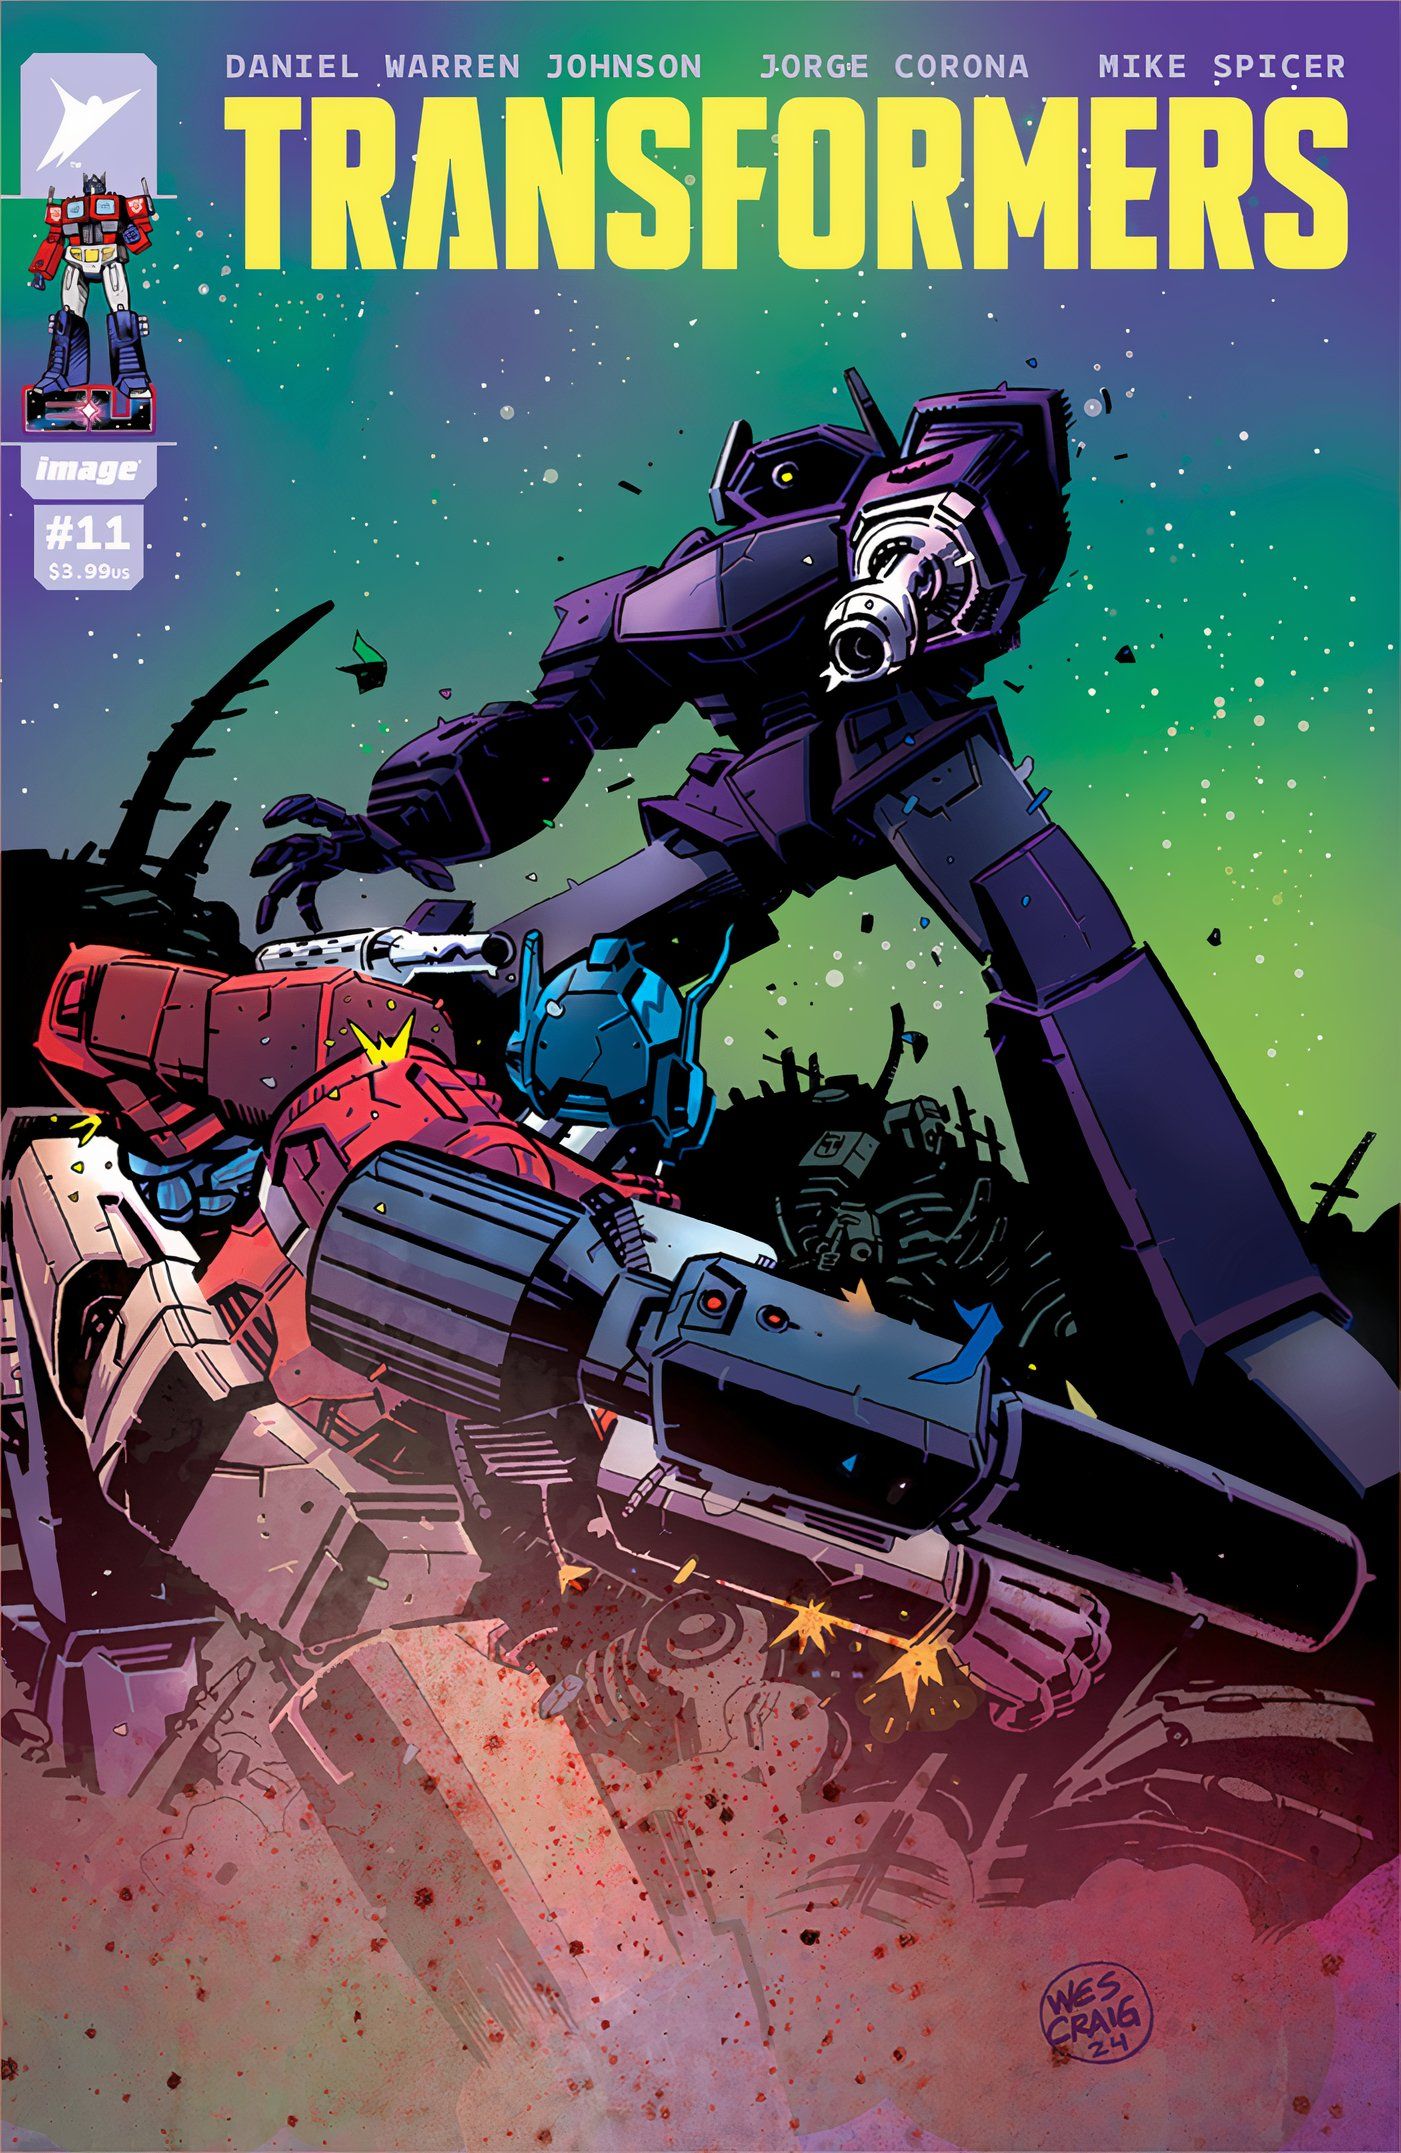 Capa da Transformers #11 Shockwave mira em Optimus Prime